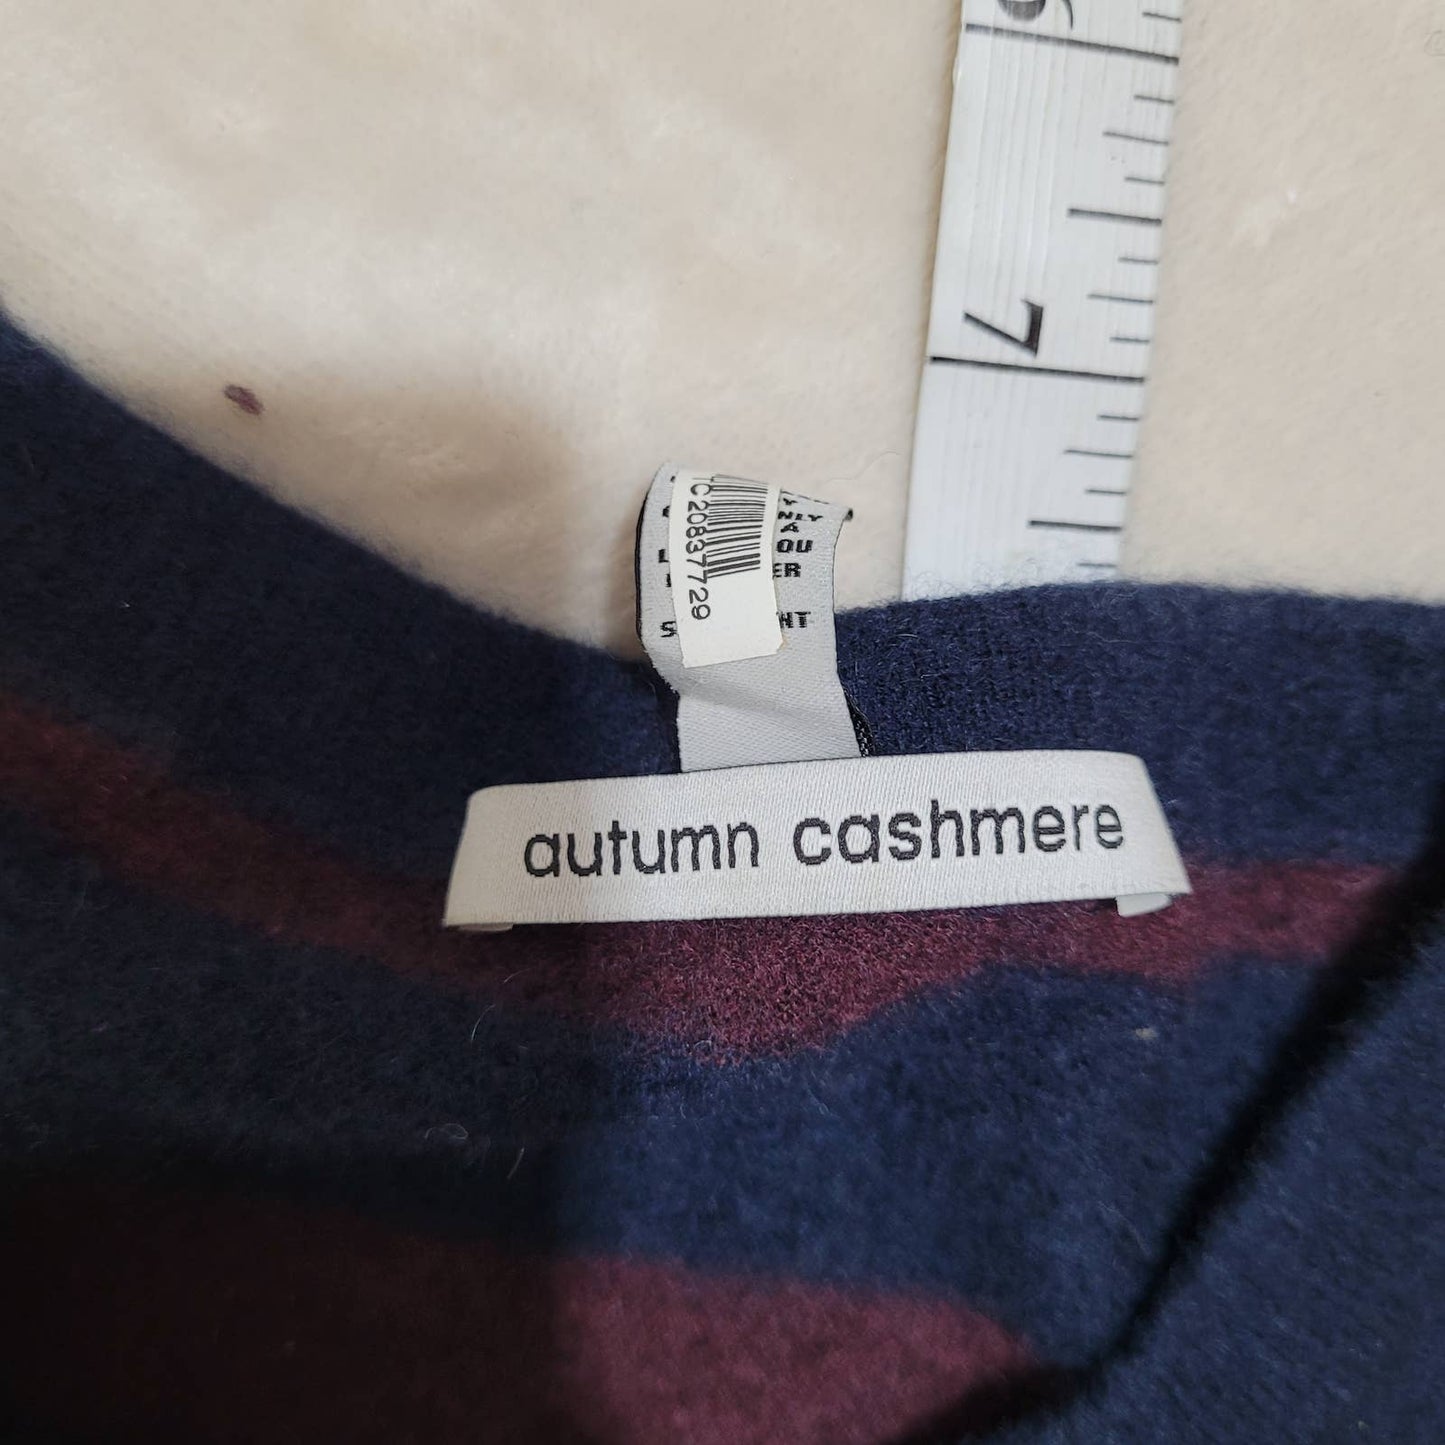 Autumn Cashmere Burgundy and Navy Striped Cashmere Sweater - Size Medium